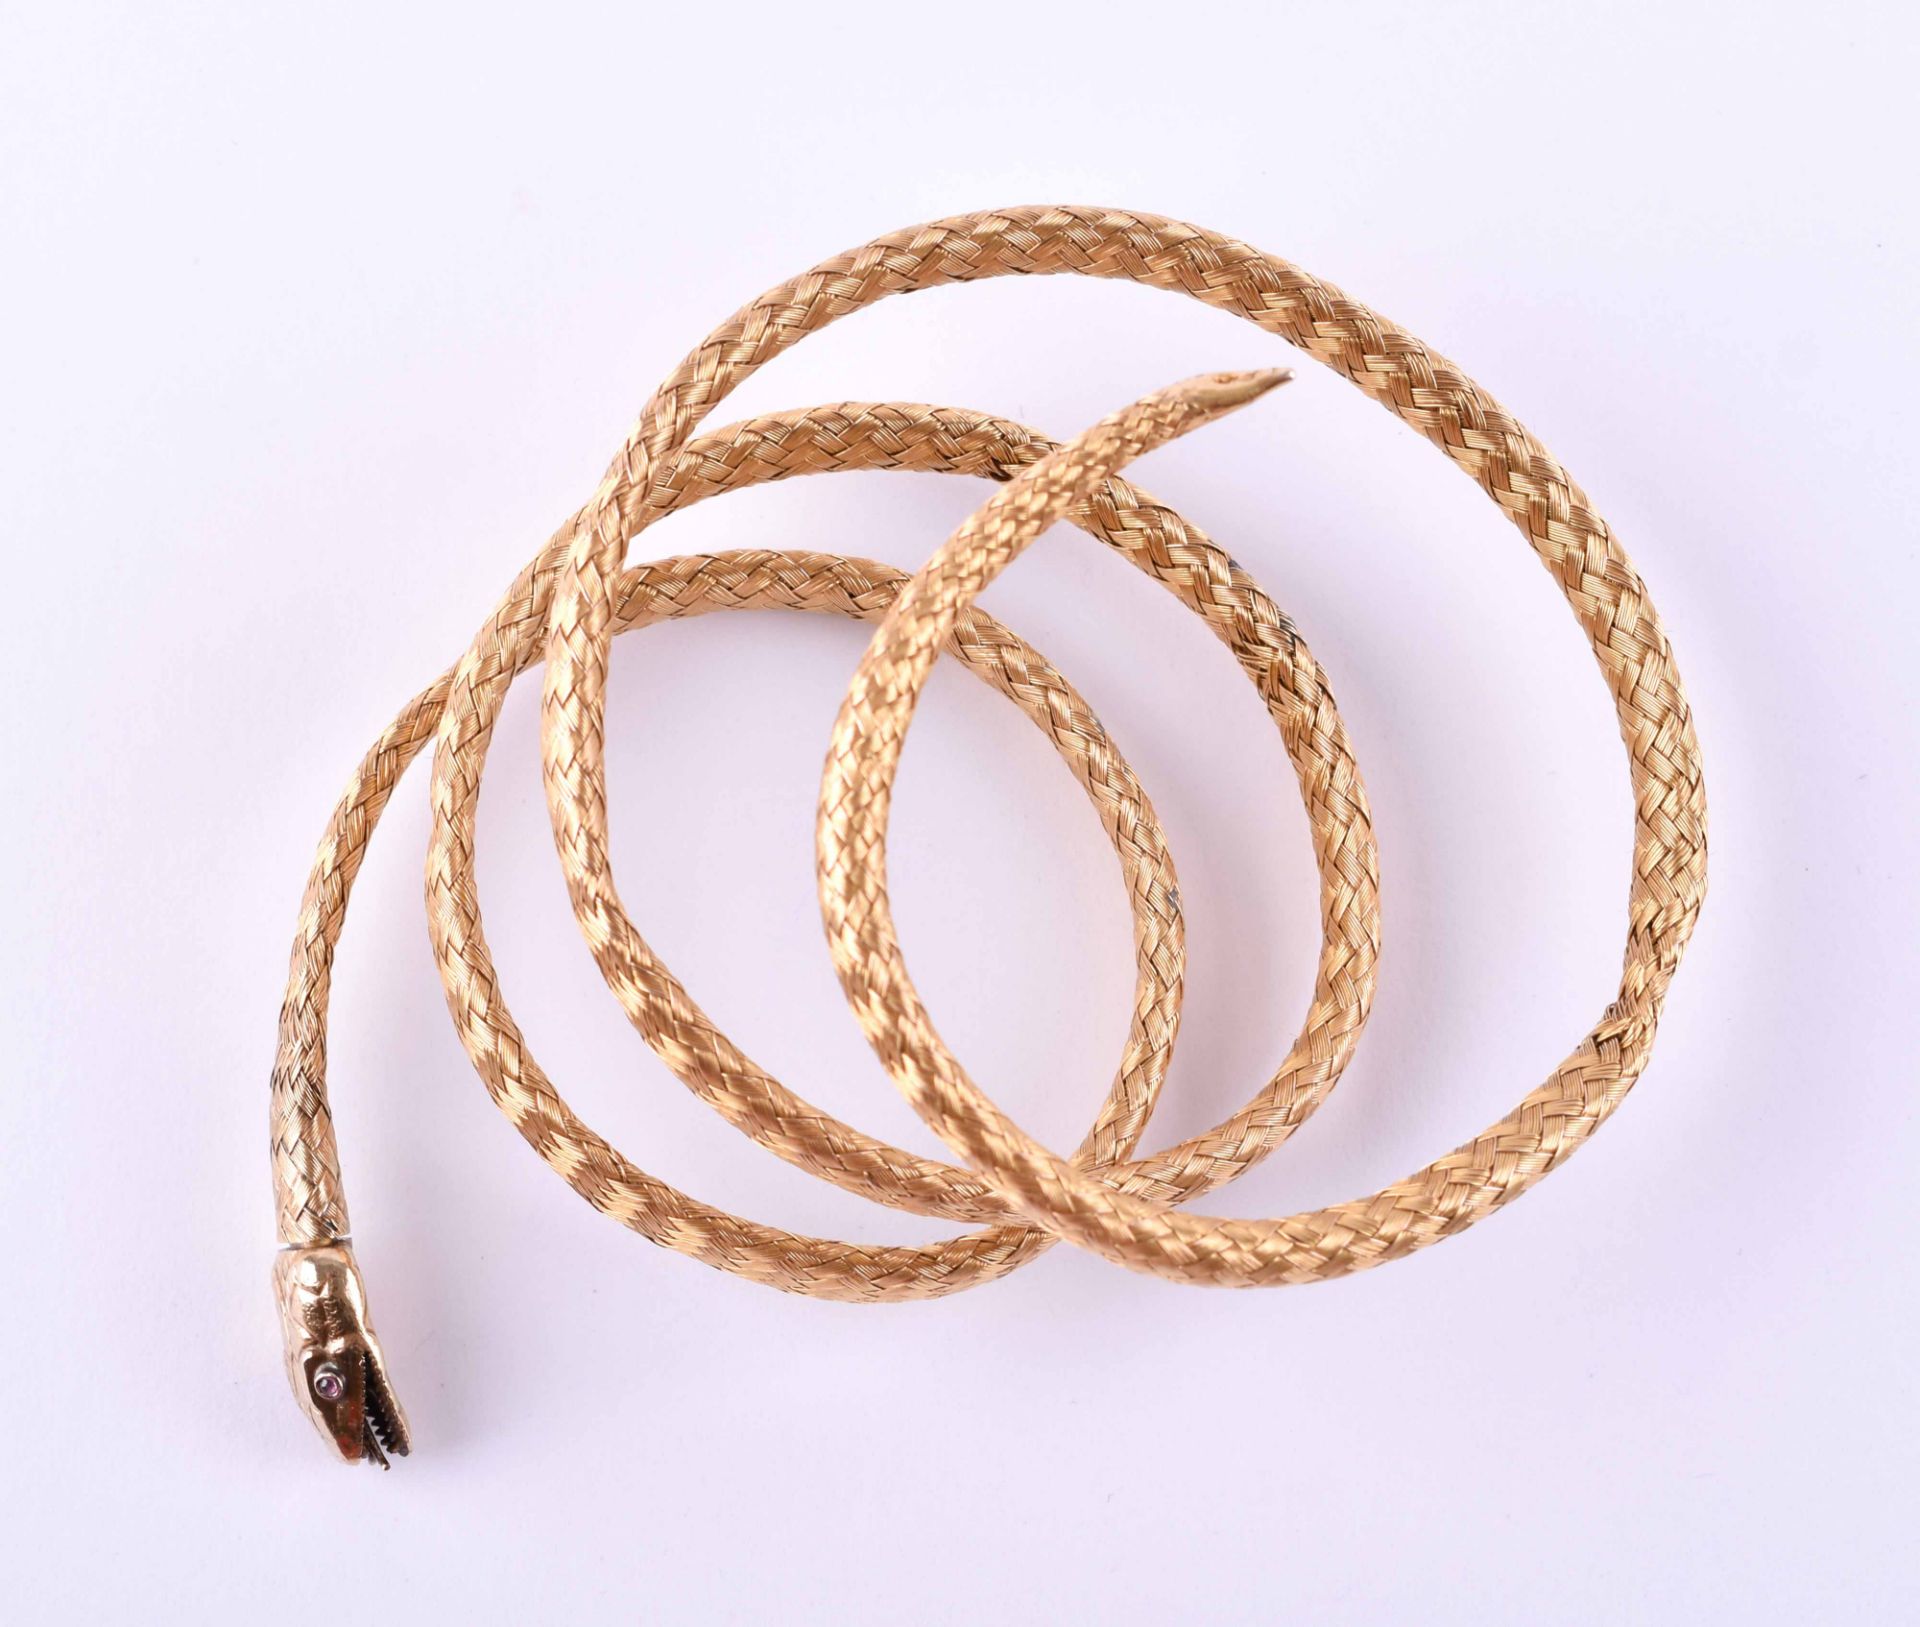  Snake bracelet 19th century - Image 3 of 4